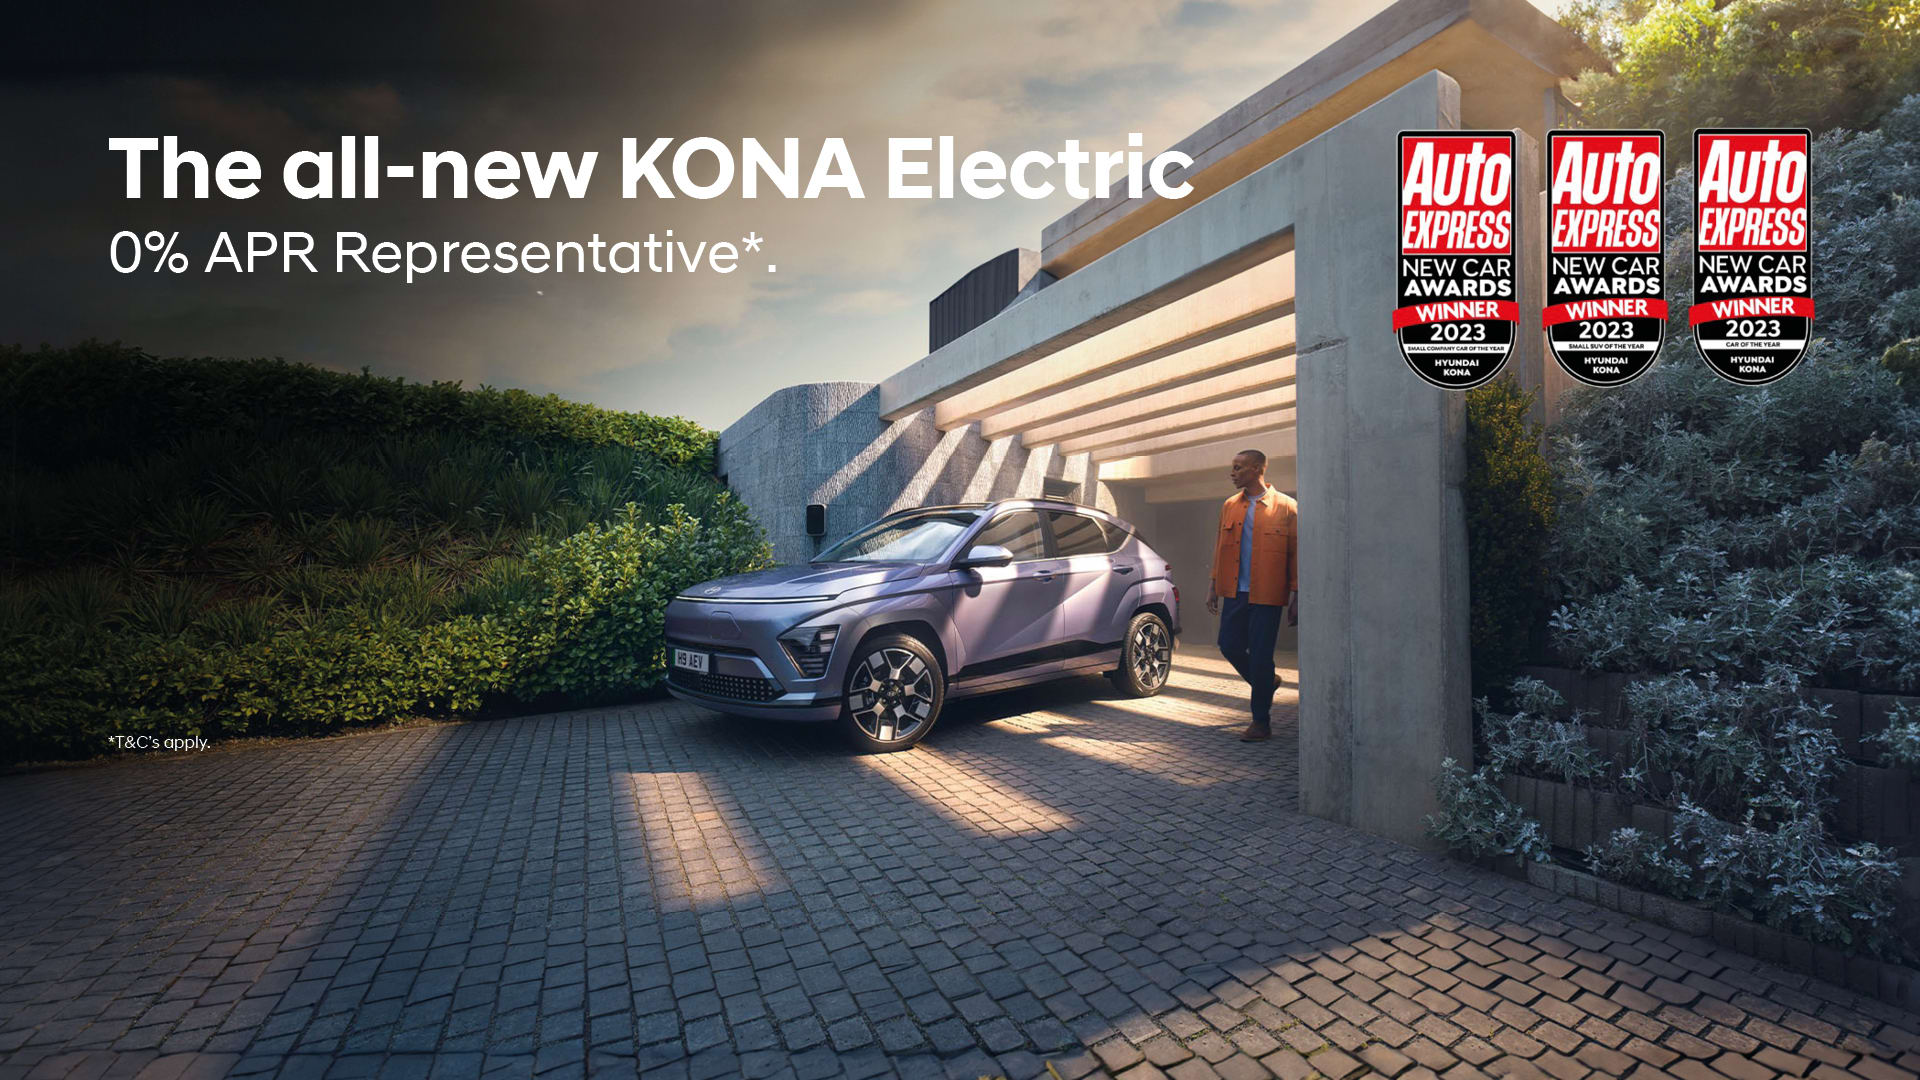 Q4 All-new KONA Electric